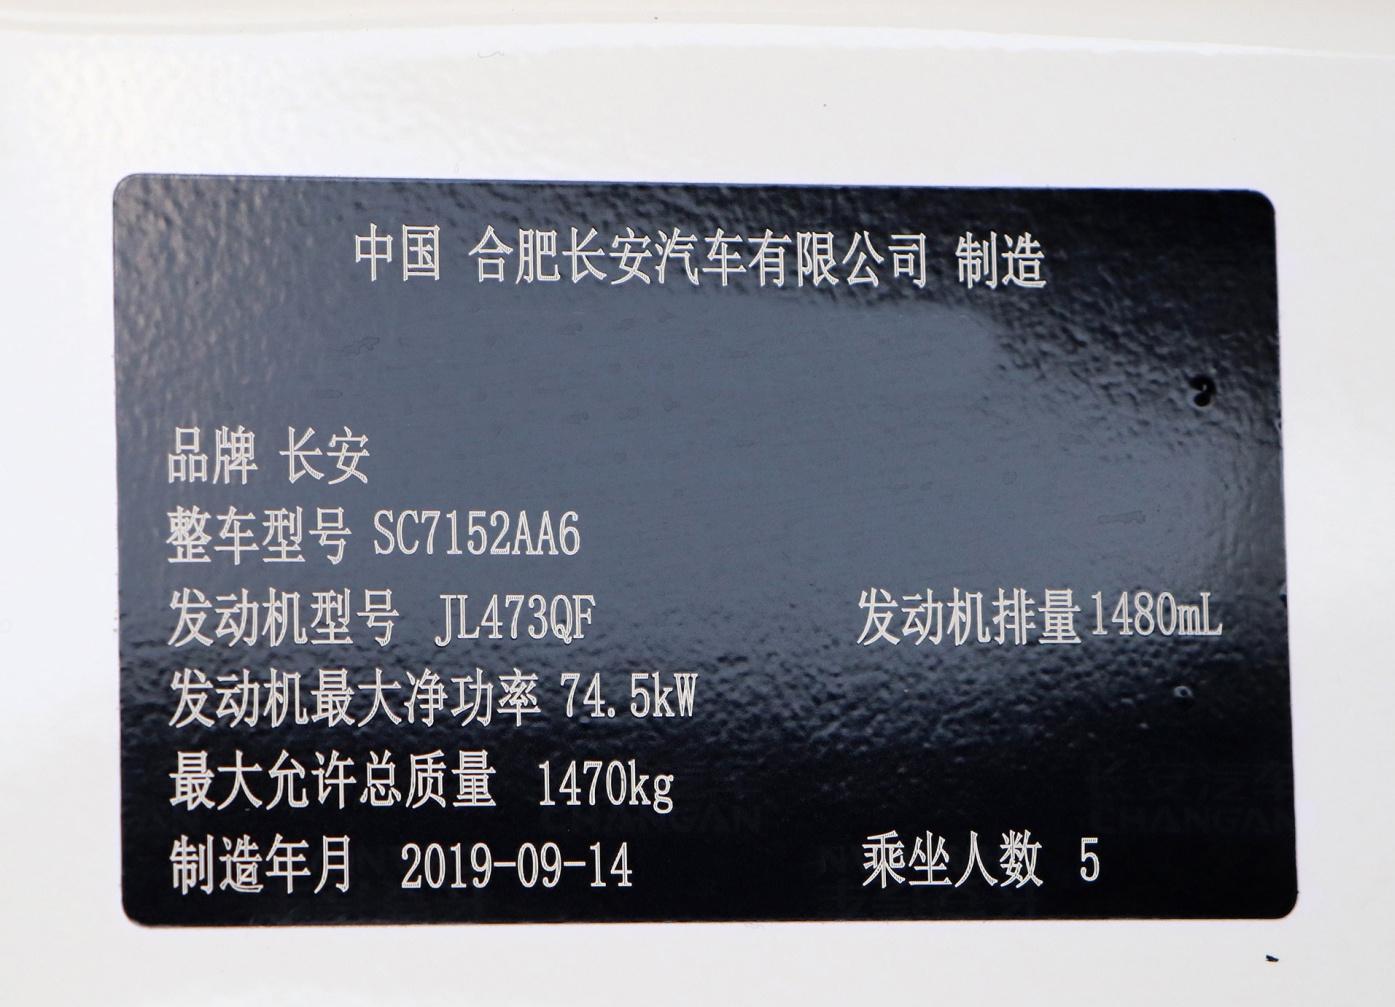 ChangAn Yuexiang Automobile nameplate